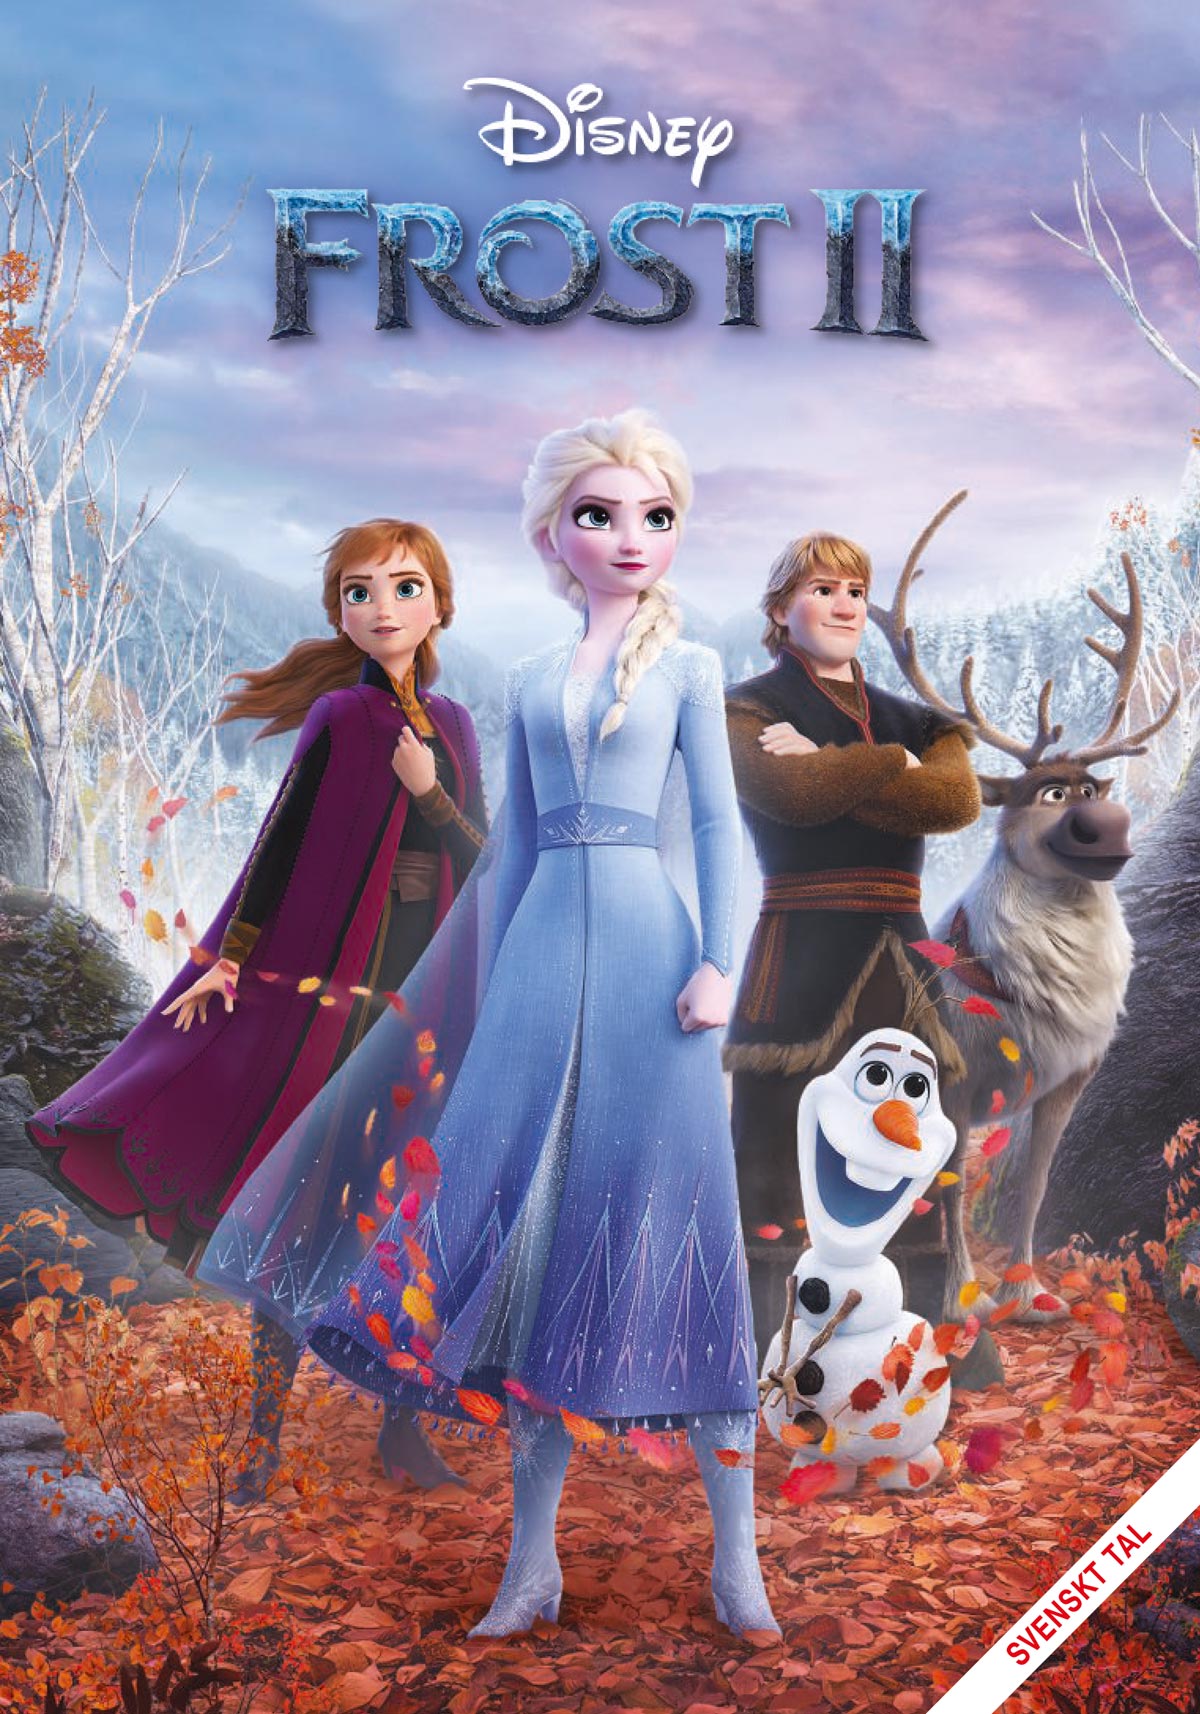 Frost Film Svenska Online